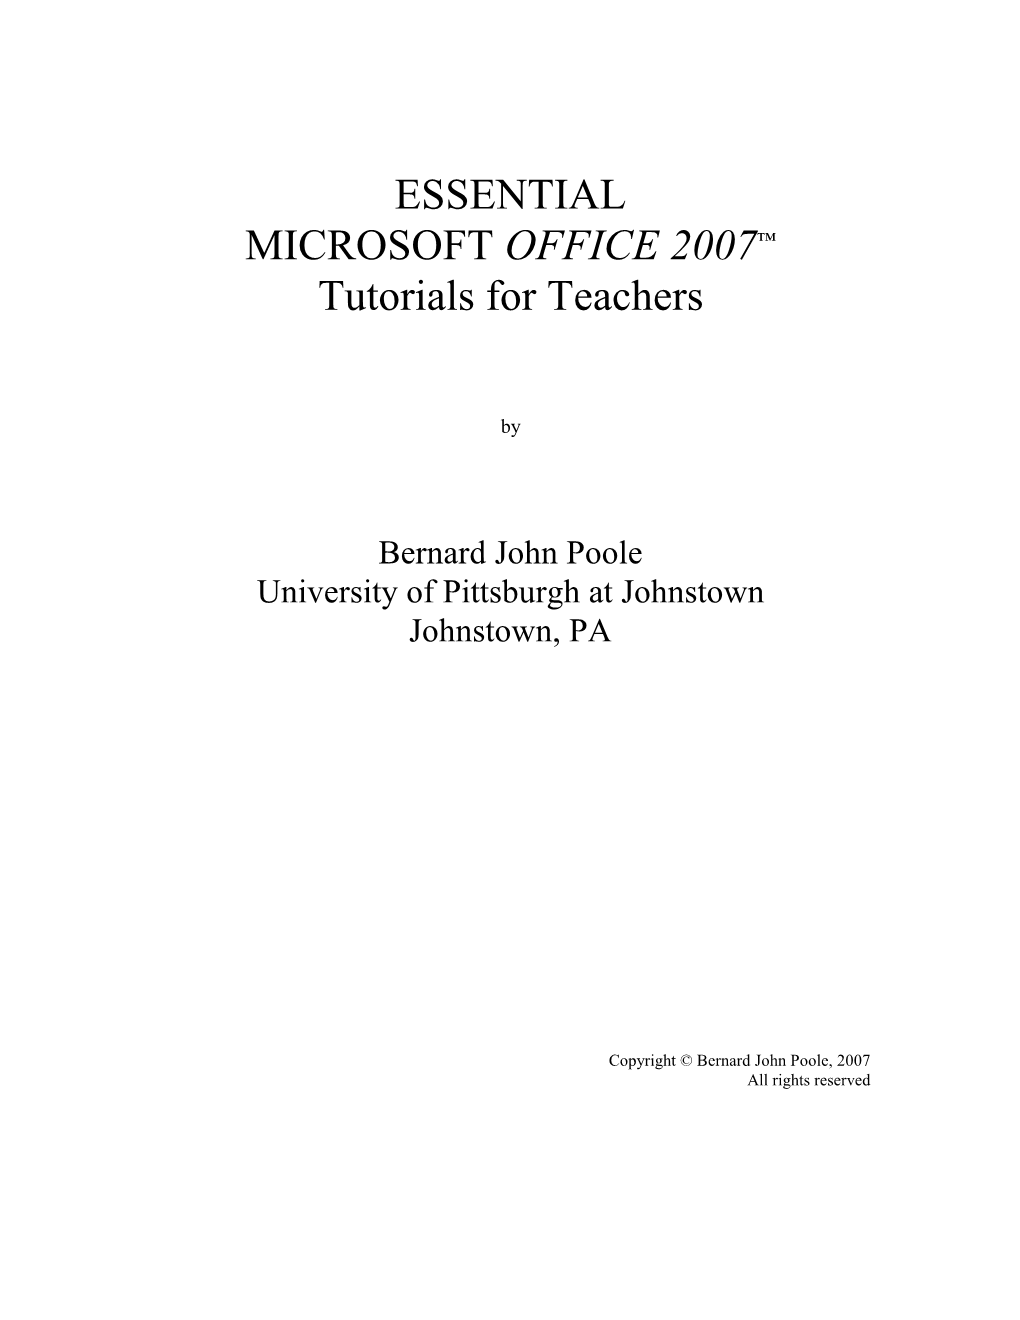 ESSENTIAL MICROSOFT OFFICE 2007™ Tutorials for Teachers